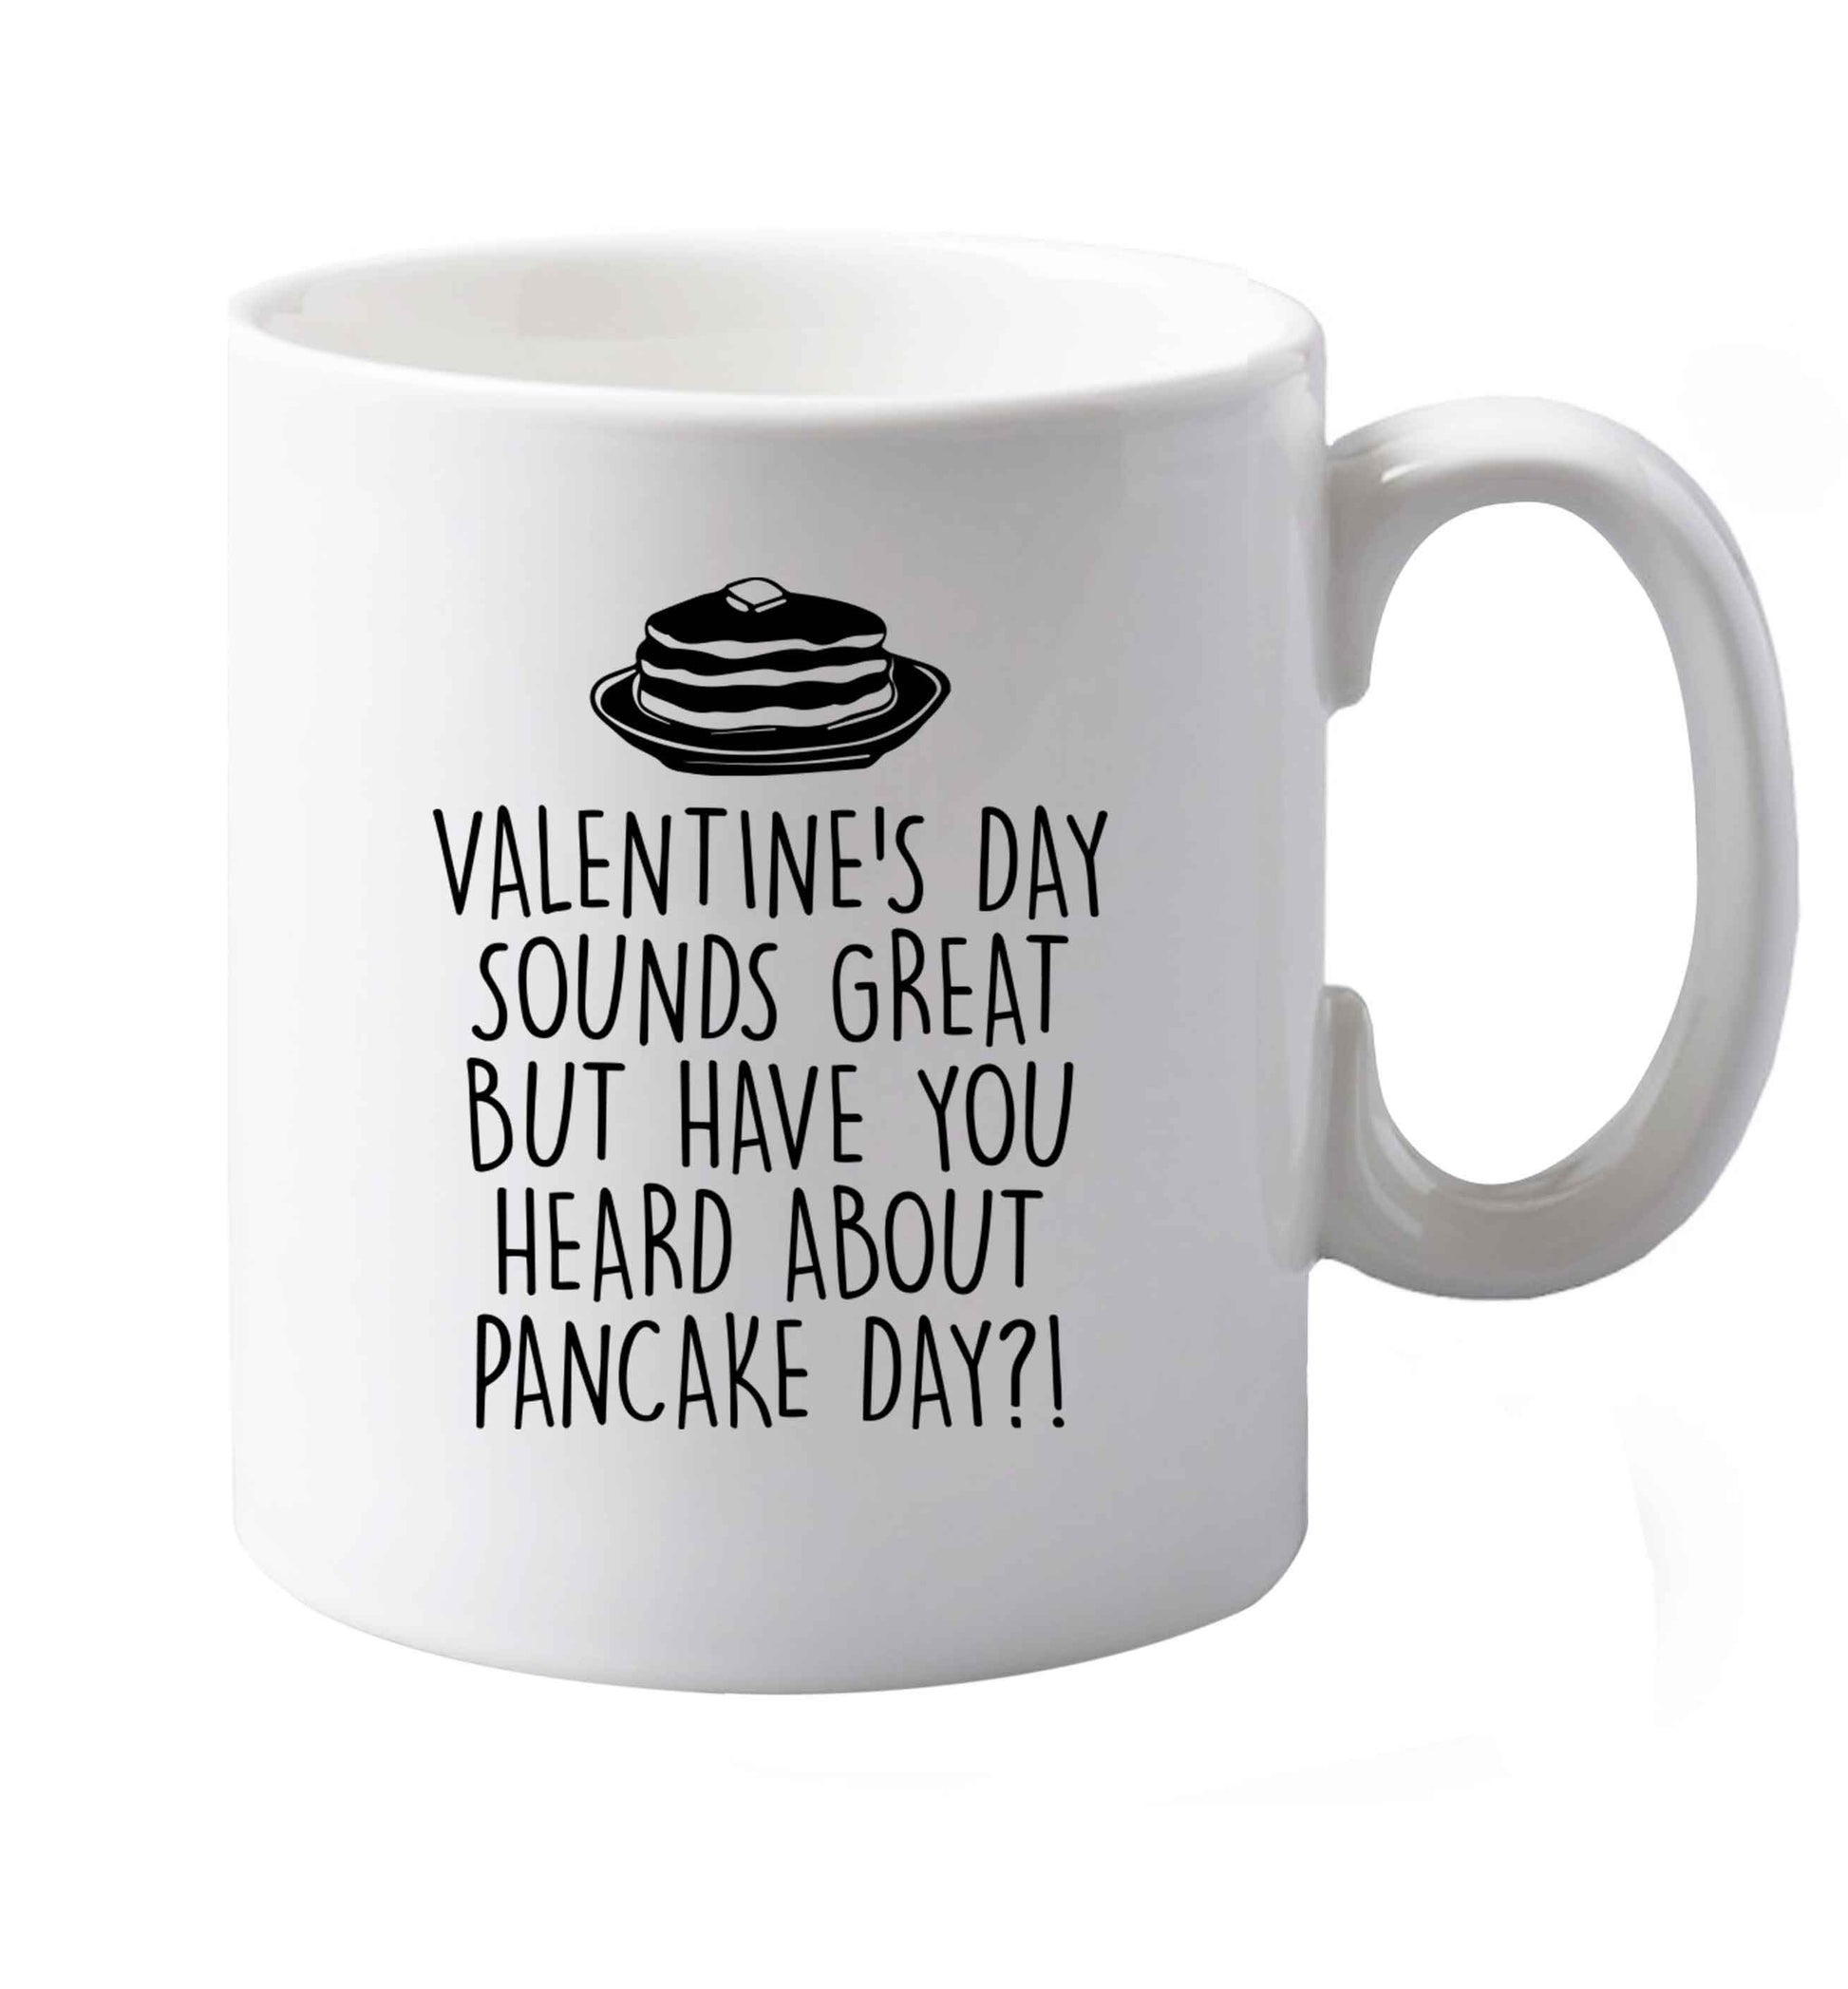 10 oz Valentine's Day Great Heard Pancake Day ceramic mug both sides